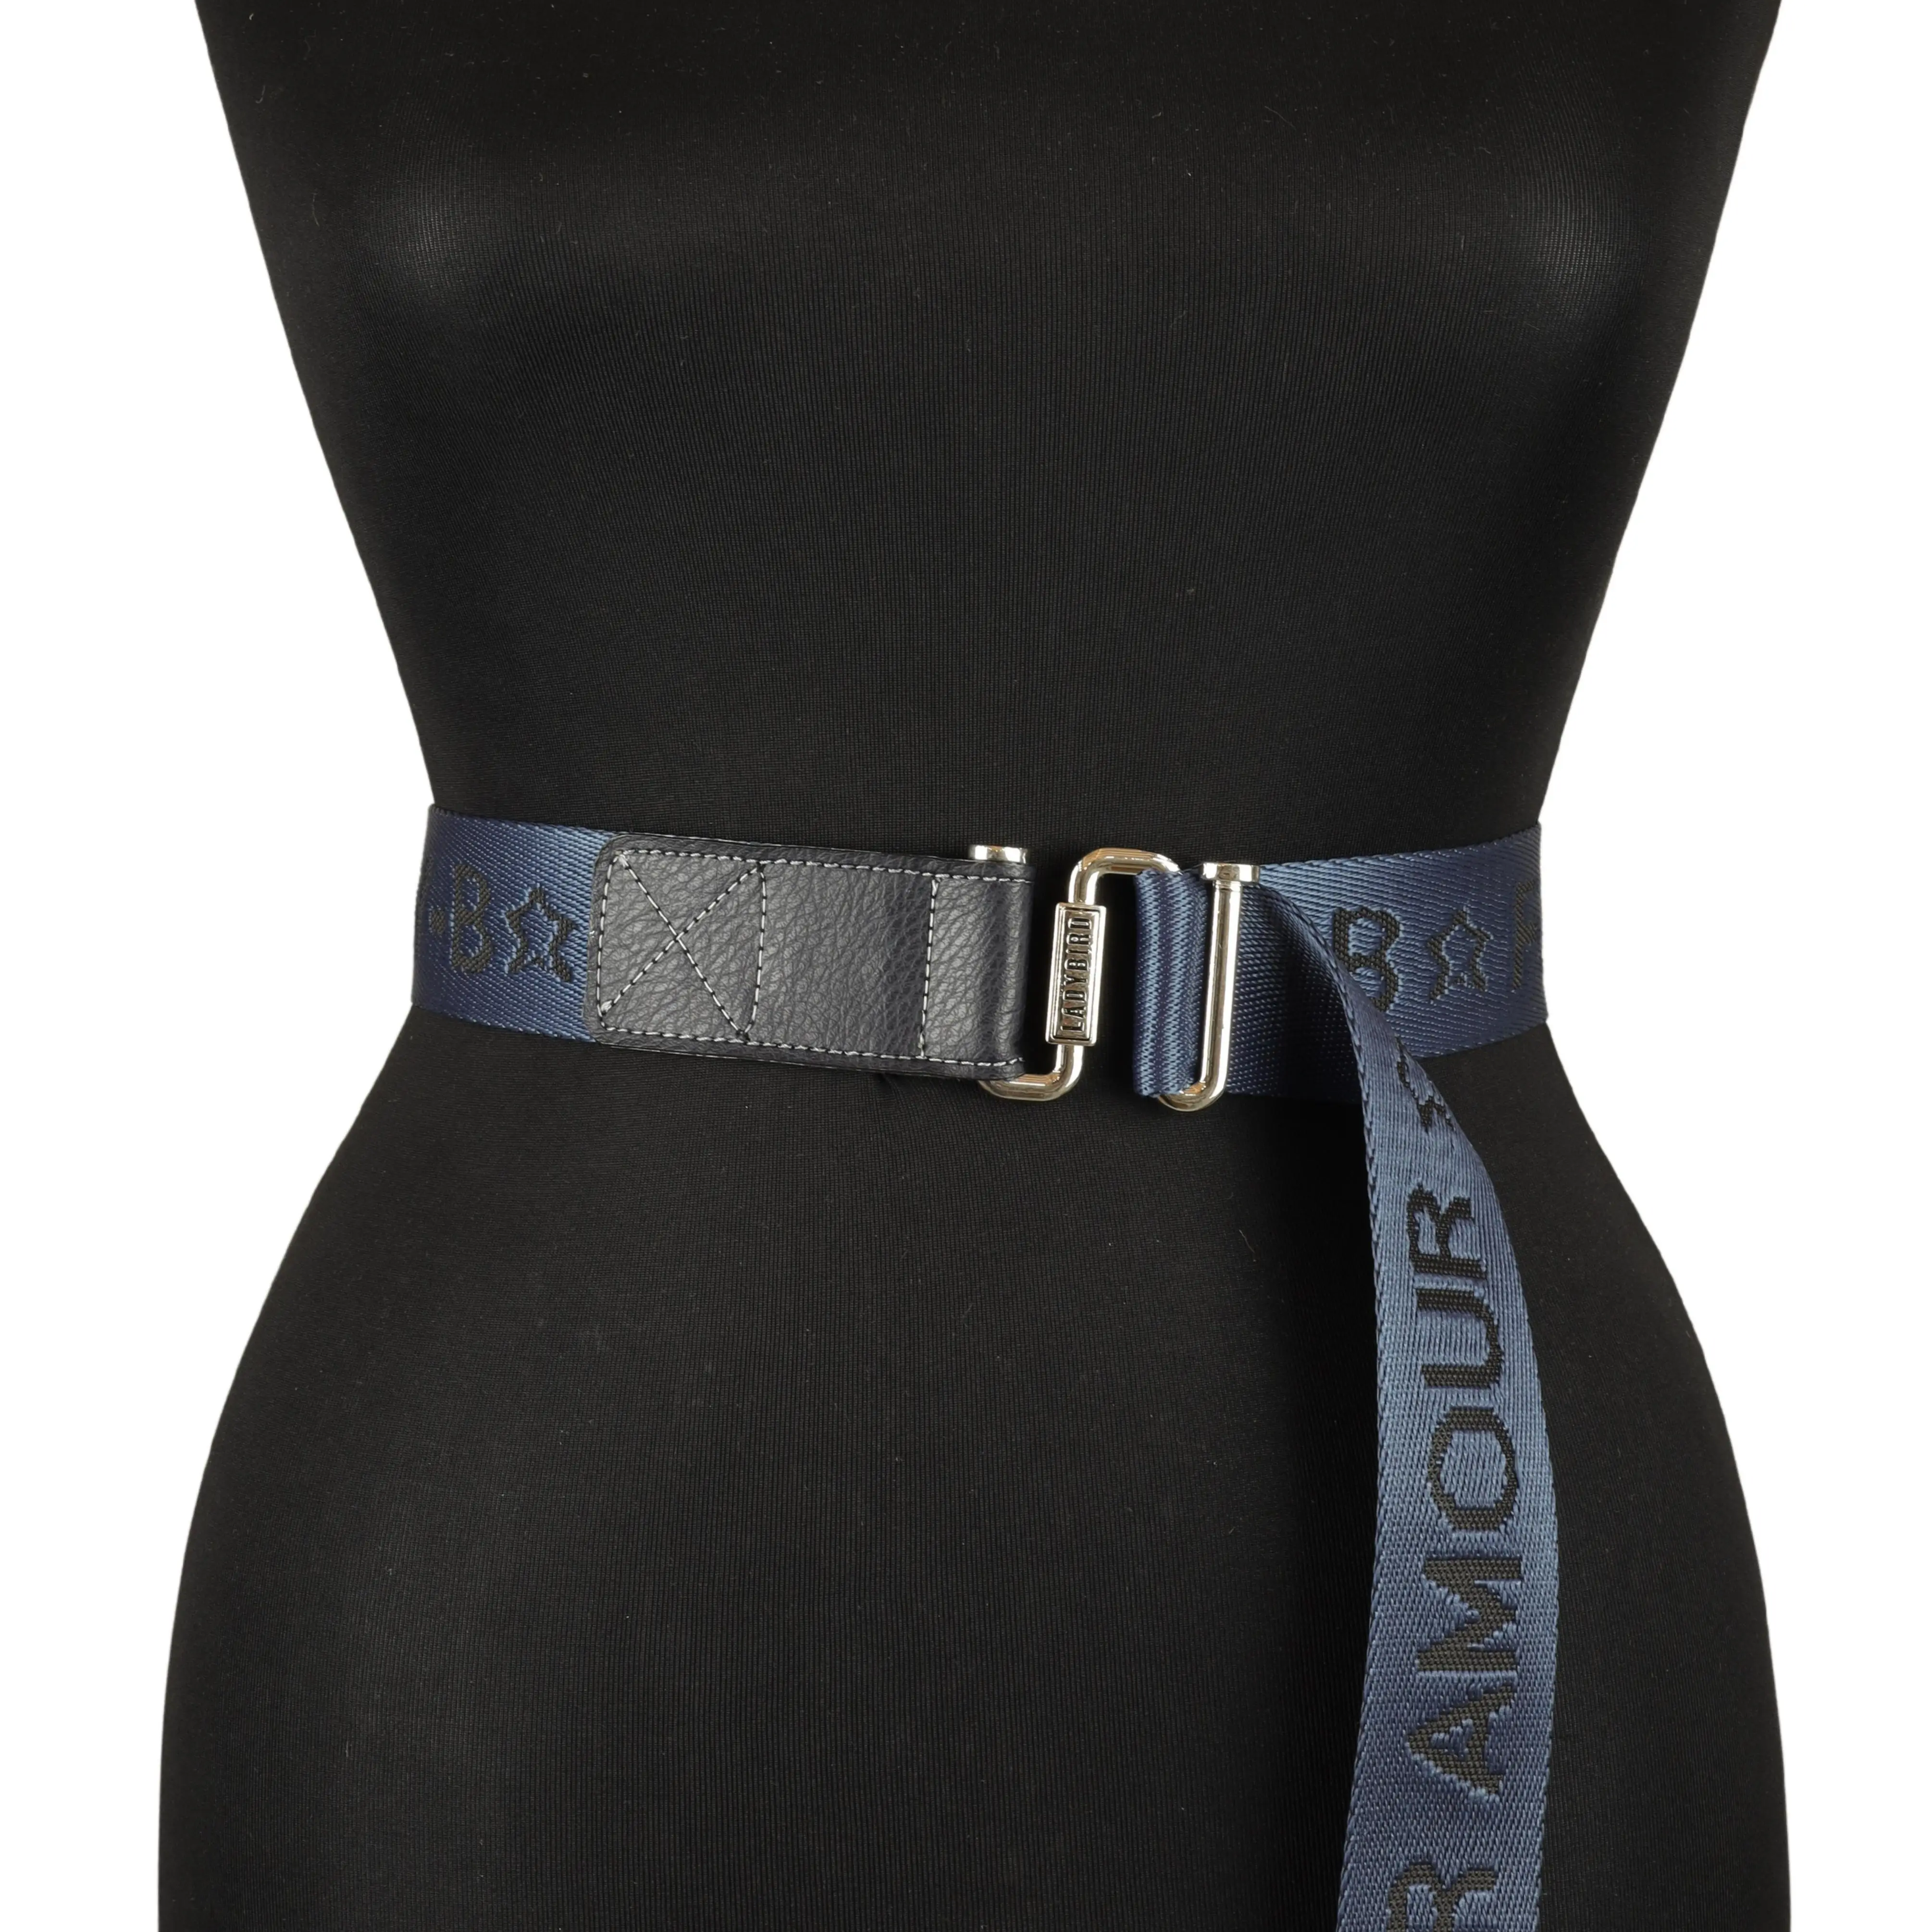 Custom Elastic Fabric Belts for Women and Men with Custom Belt Buckle